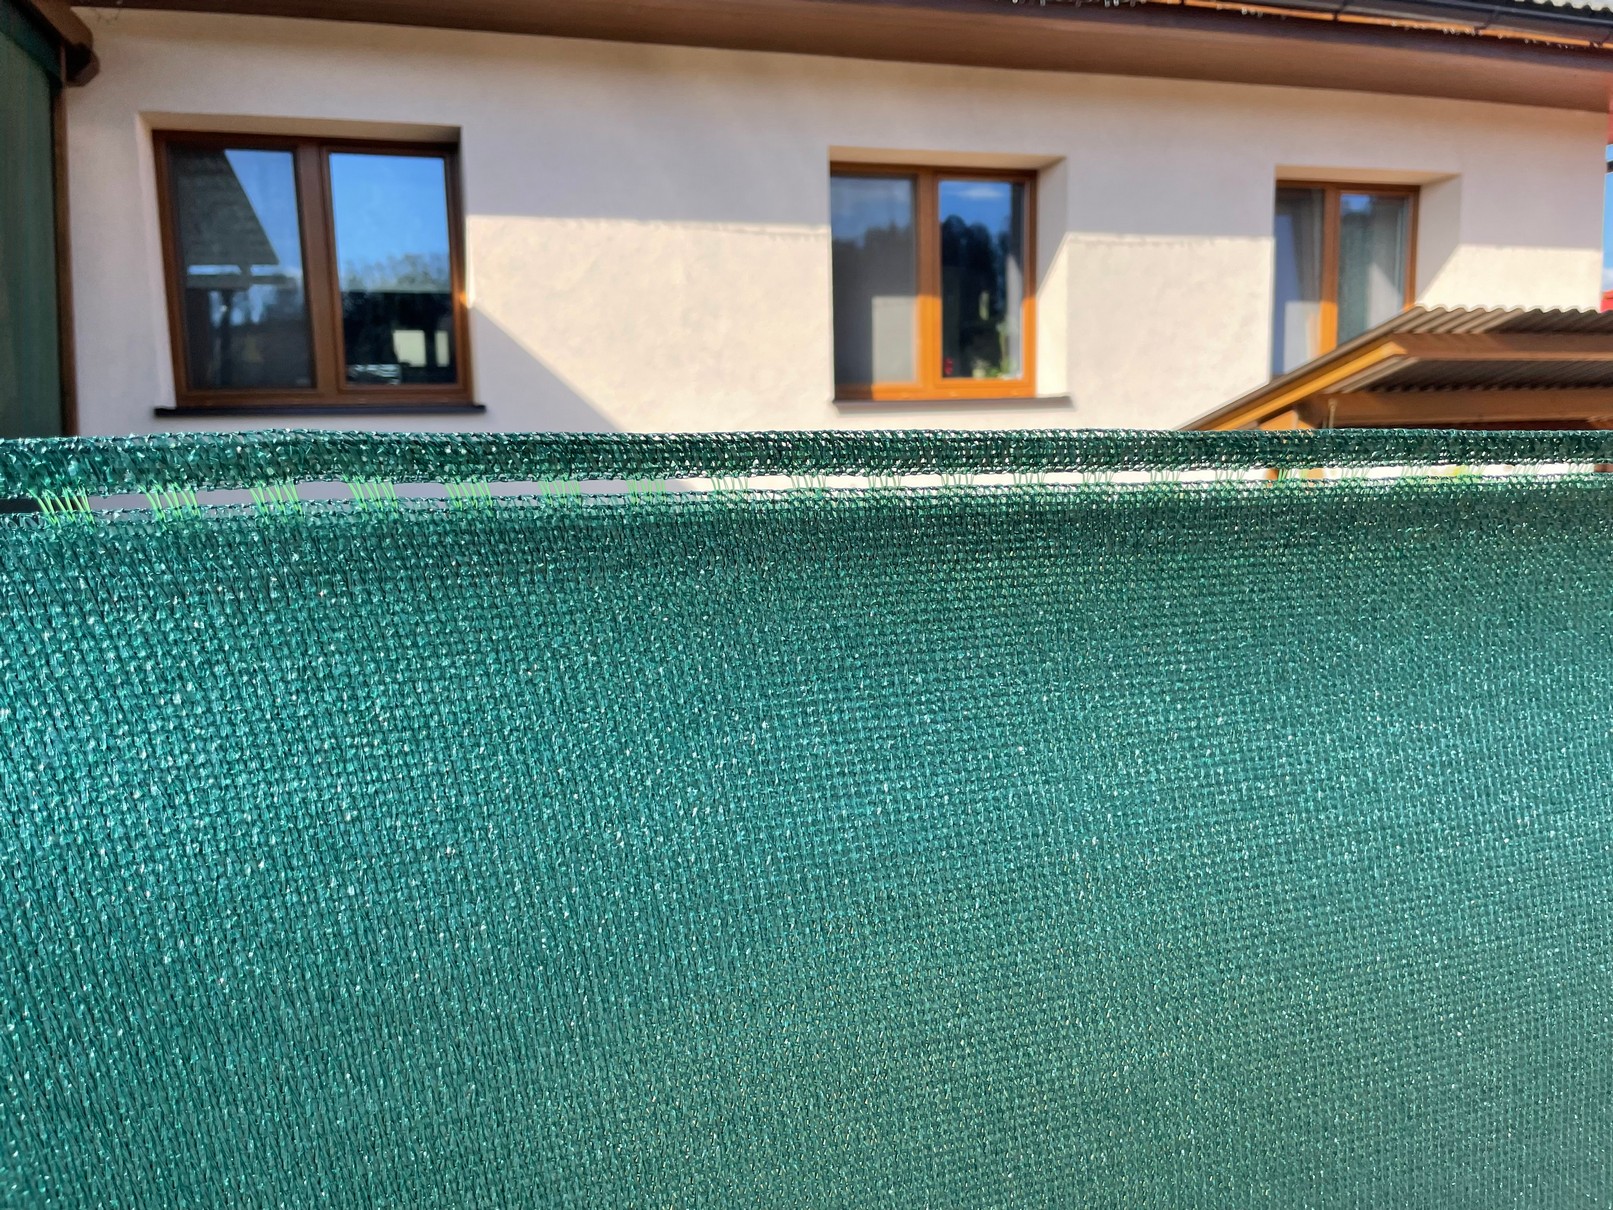 GTEX Stínící tkanina, rašlový úplet 100%, 200g/m2, výška 1,8m, metráž po 5m (5,10,15,20m) zelená ZAHRADA Sklad6 0034